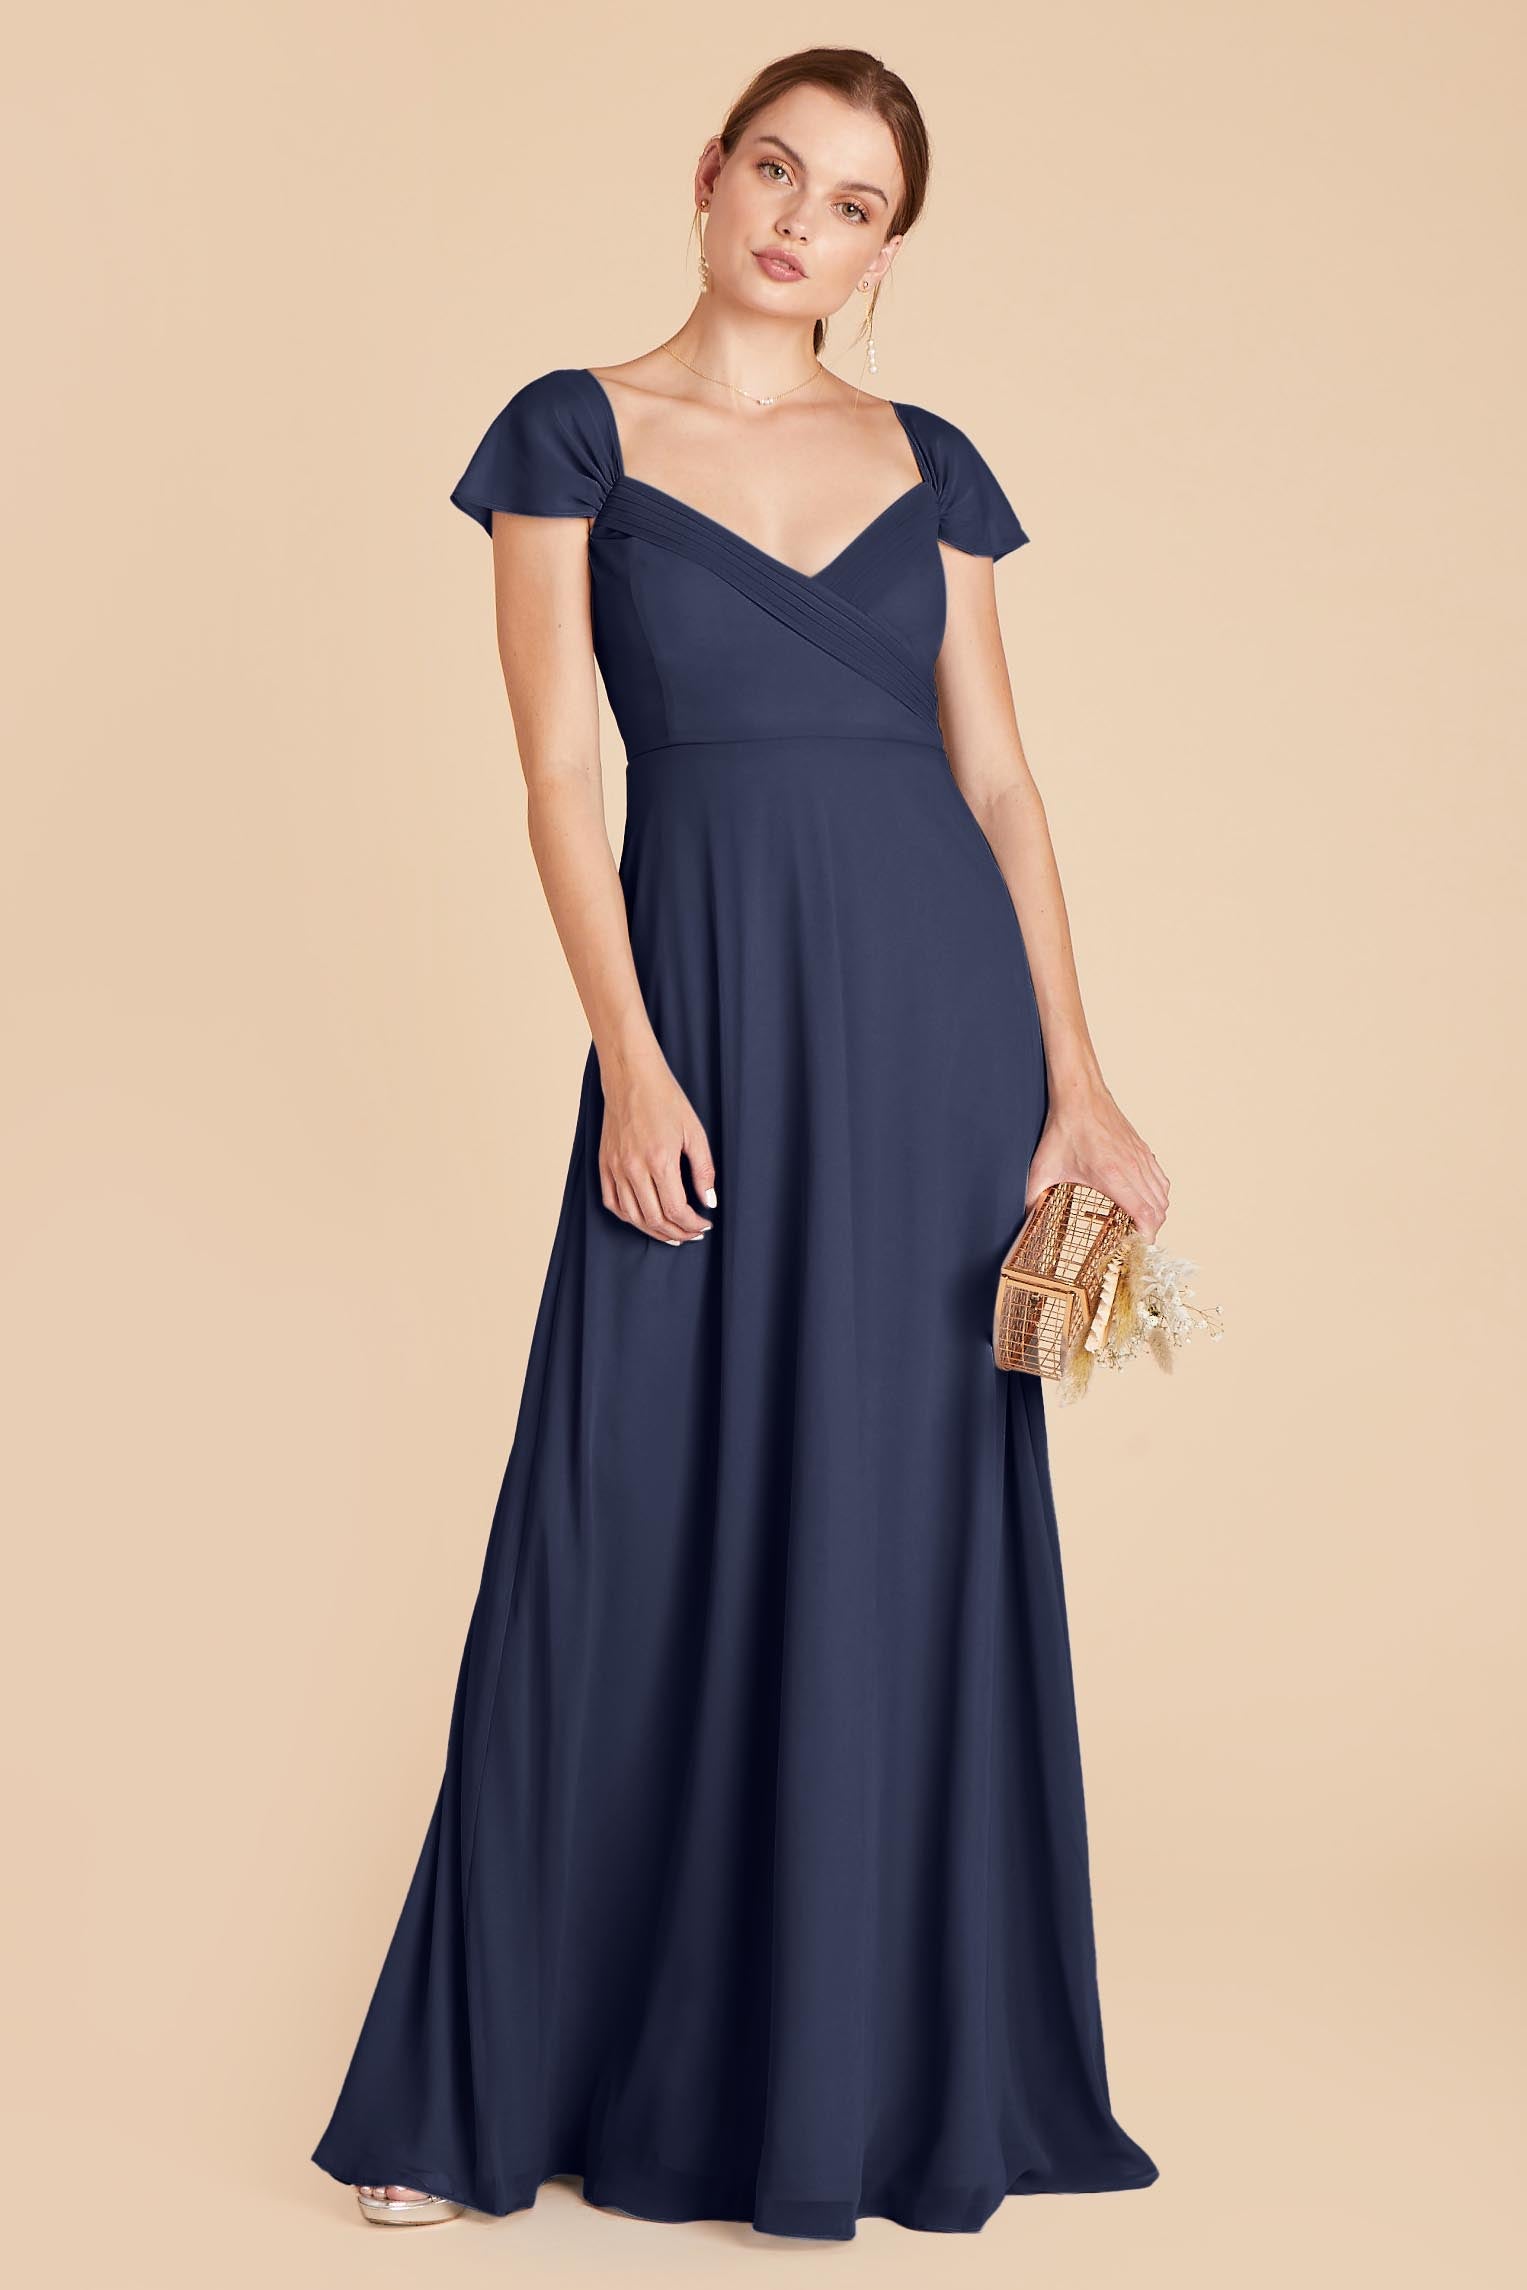 Spence Convertible Chiffon Bridesmaid Dress in Slate Blue | Birdy Grey